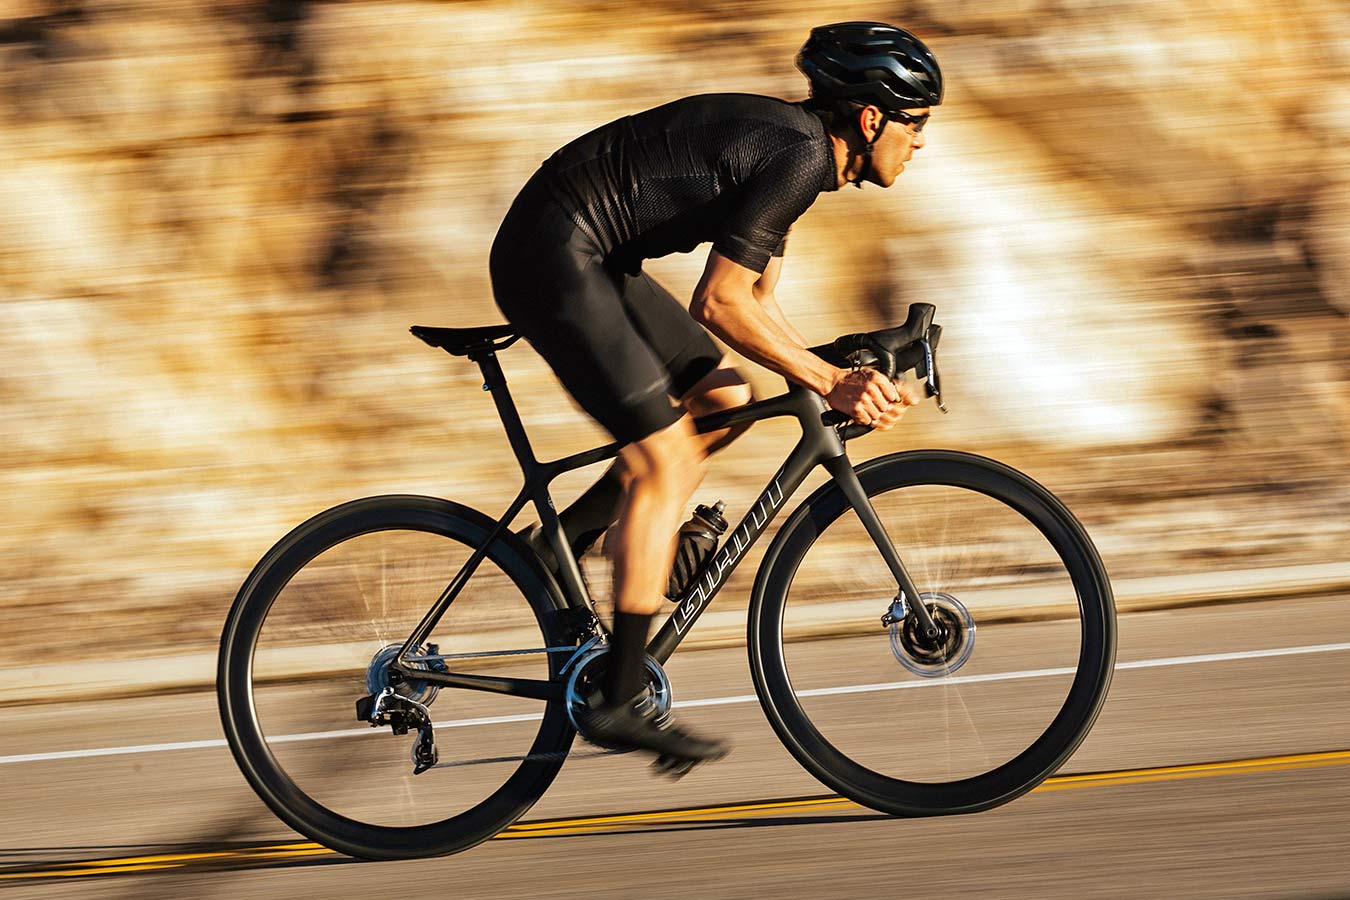 2021 Giant TCR road bike, new lightweight carbon aero road race bike